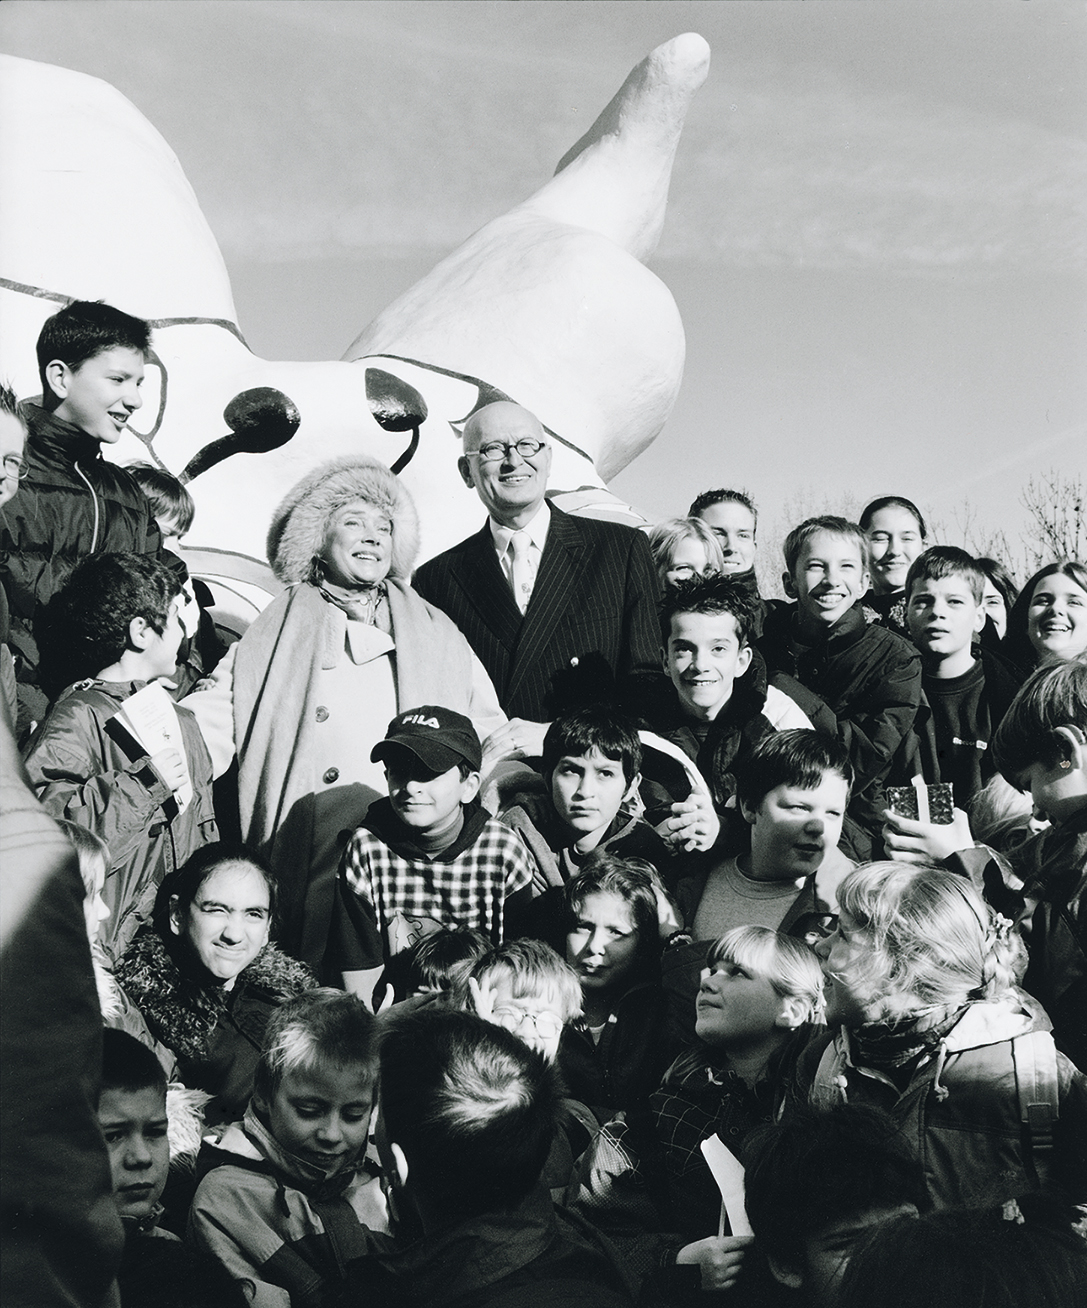 Children, Artist Niki de Saint Phalle and city mayor Herbert Schmalstieg gather in front of the artwork